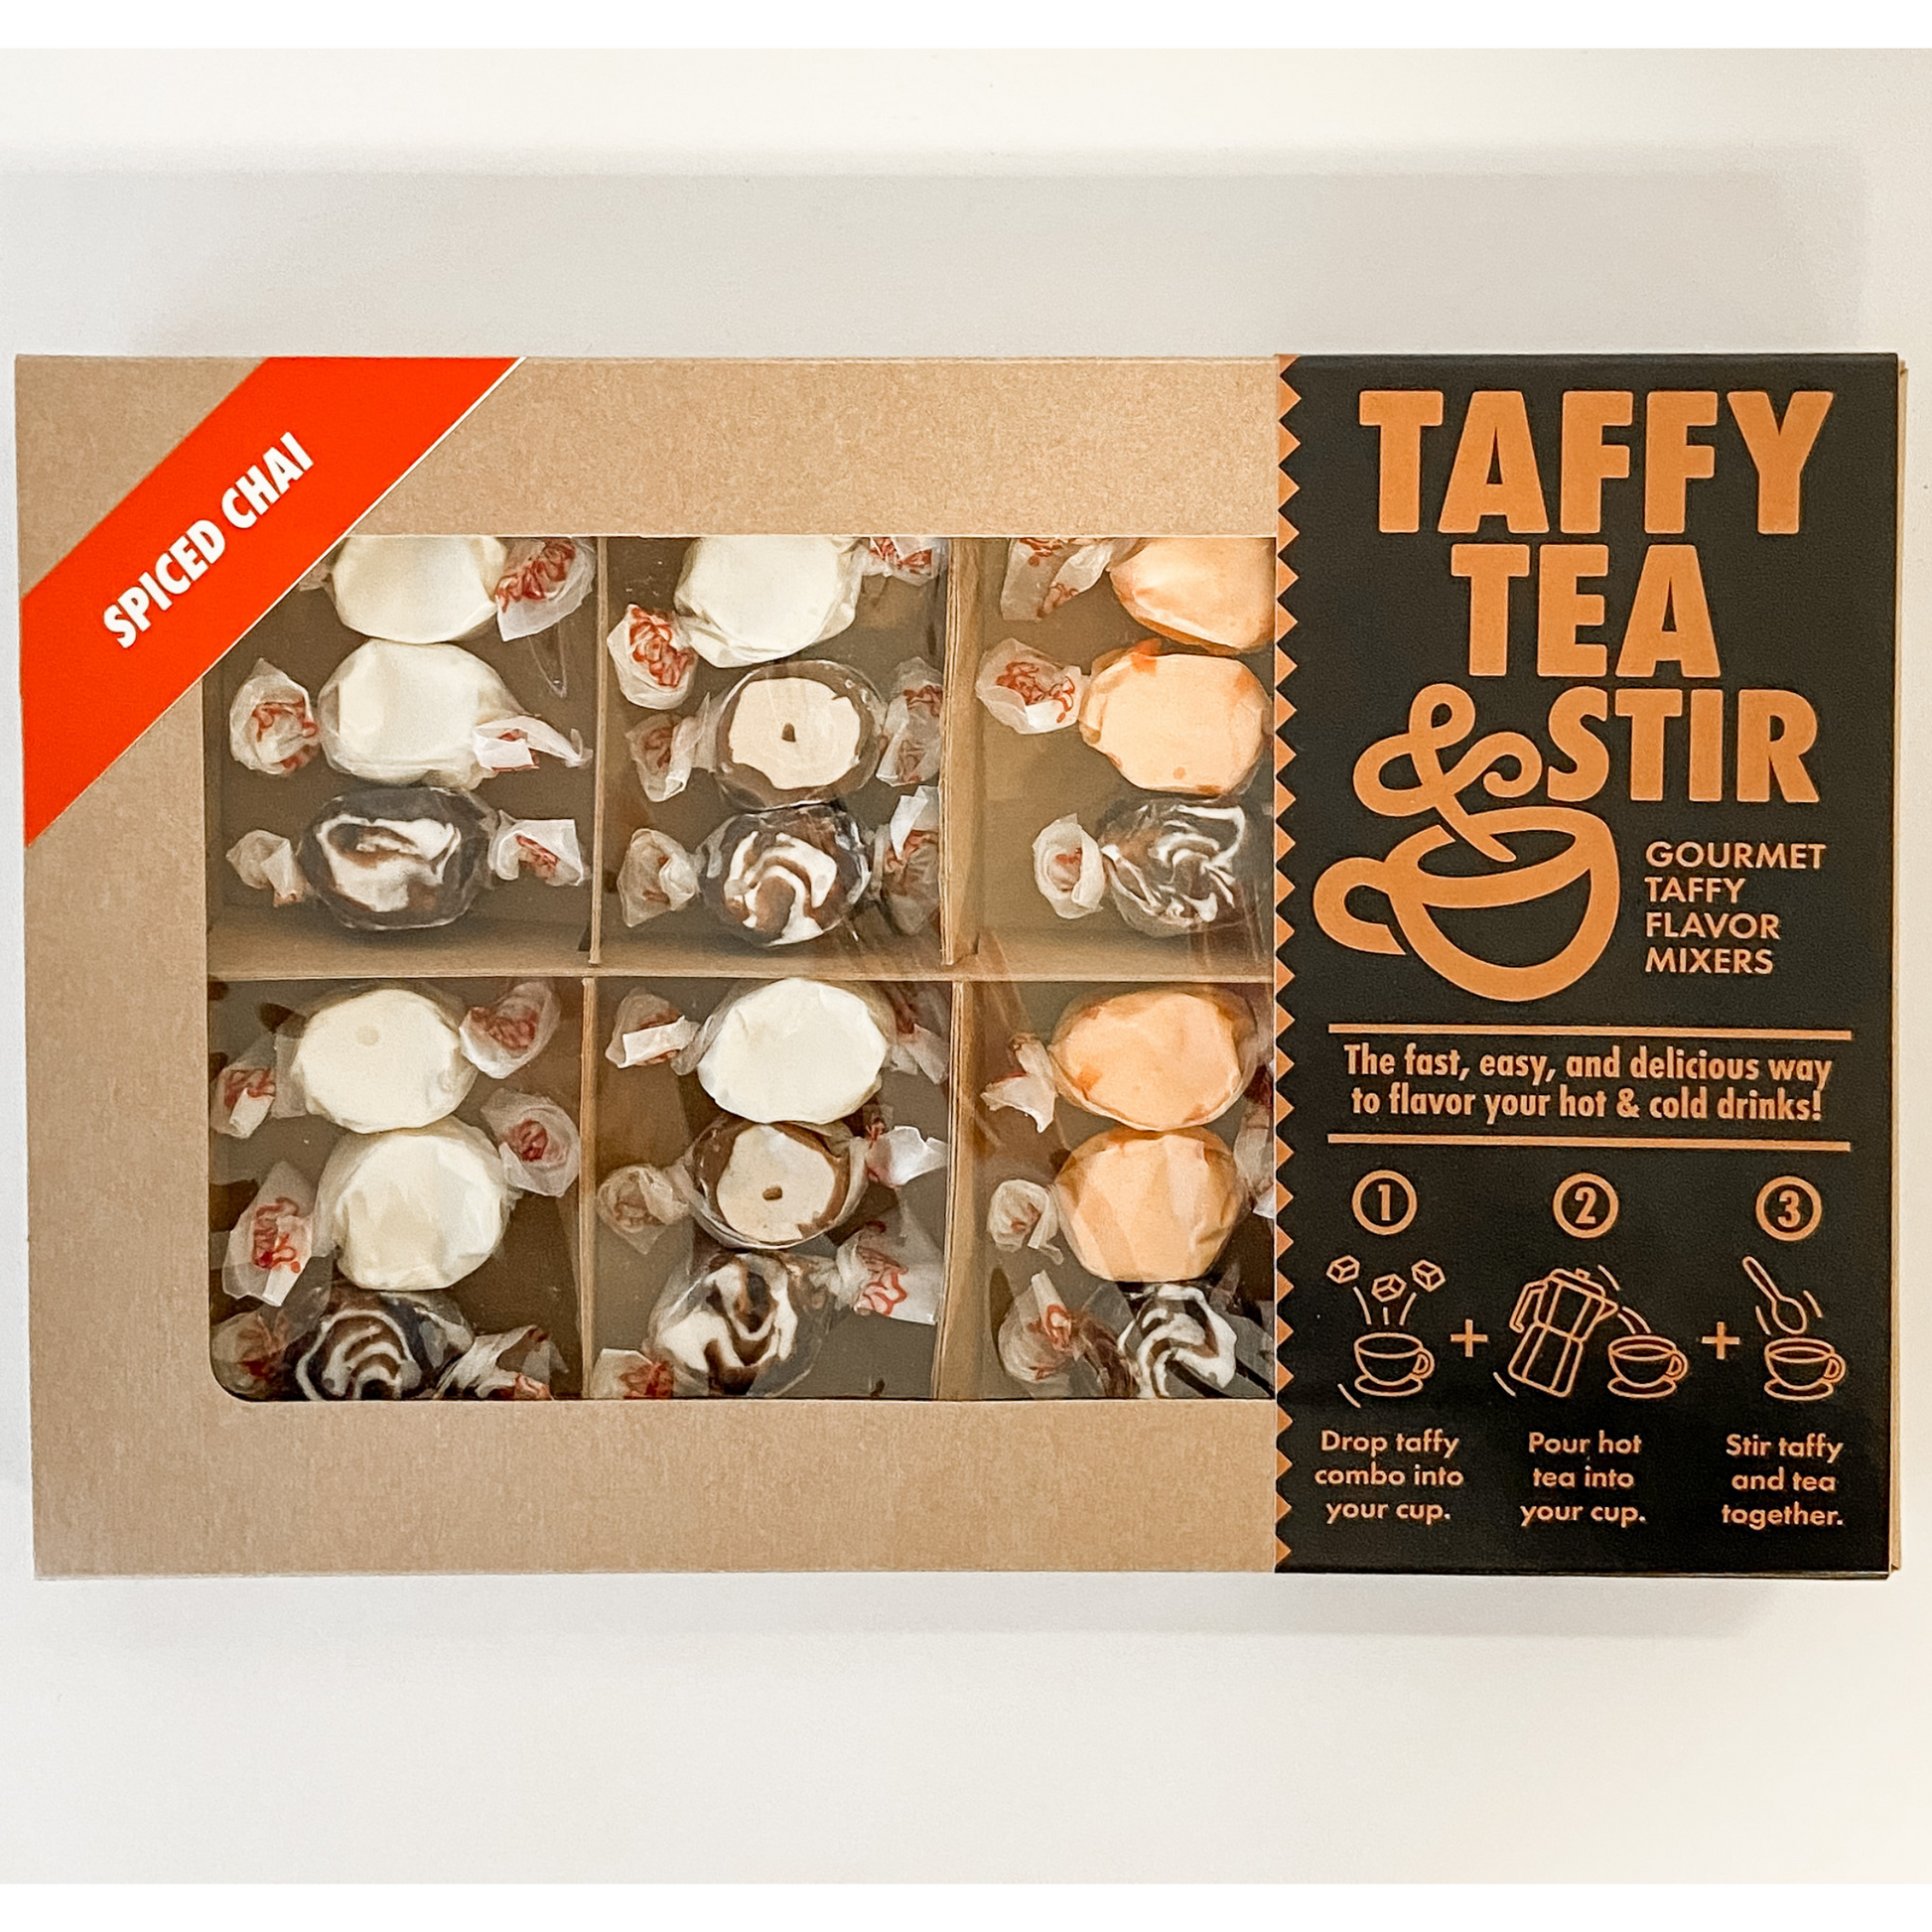 Taffy, Coffee, & Stir - Coffee Flavors Maker – Taffy 2 You